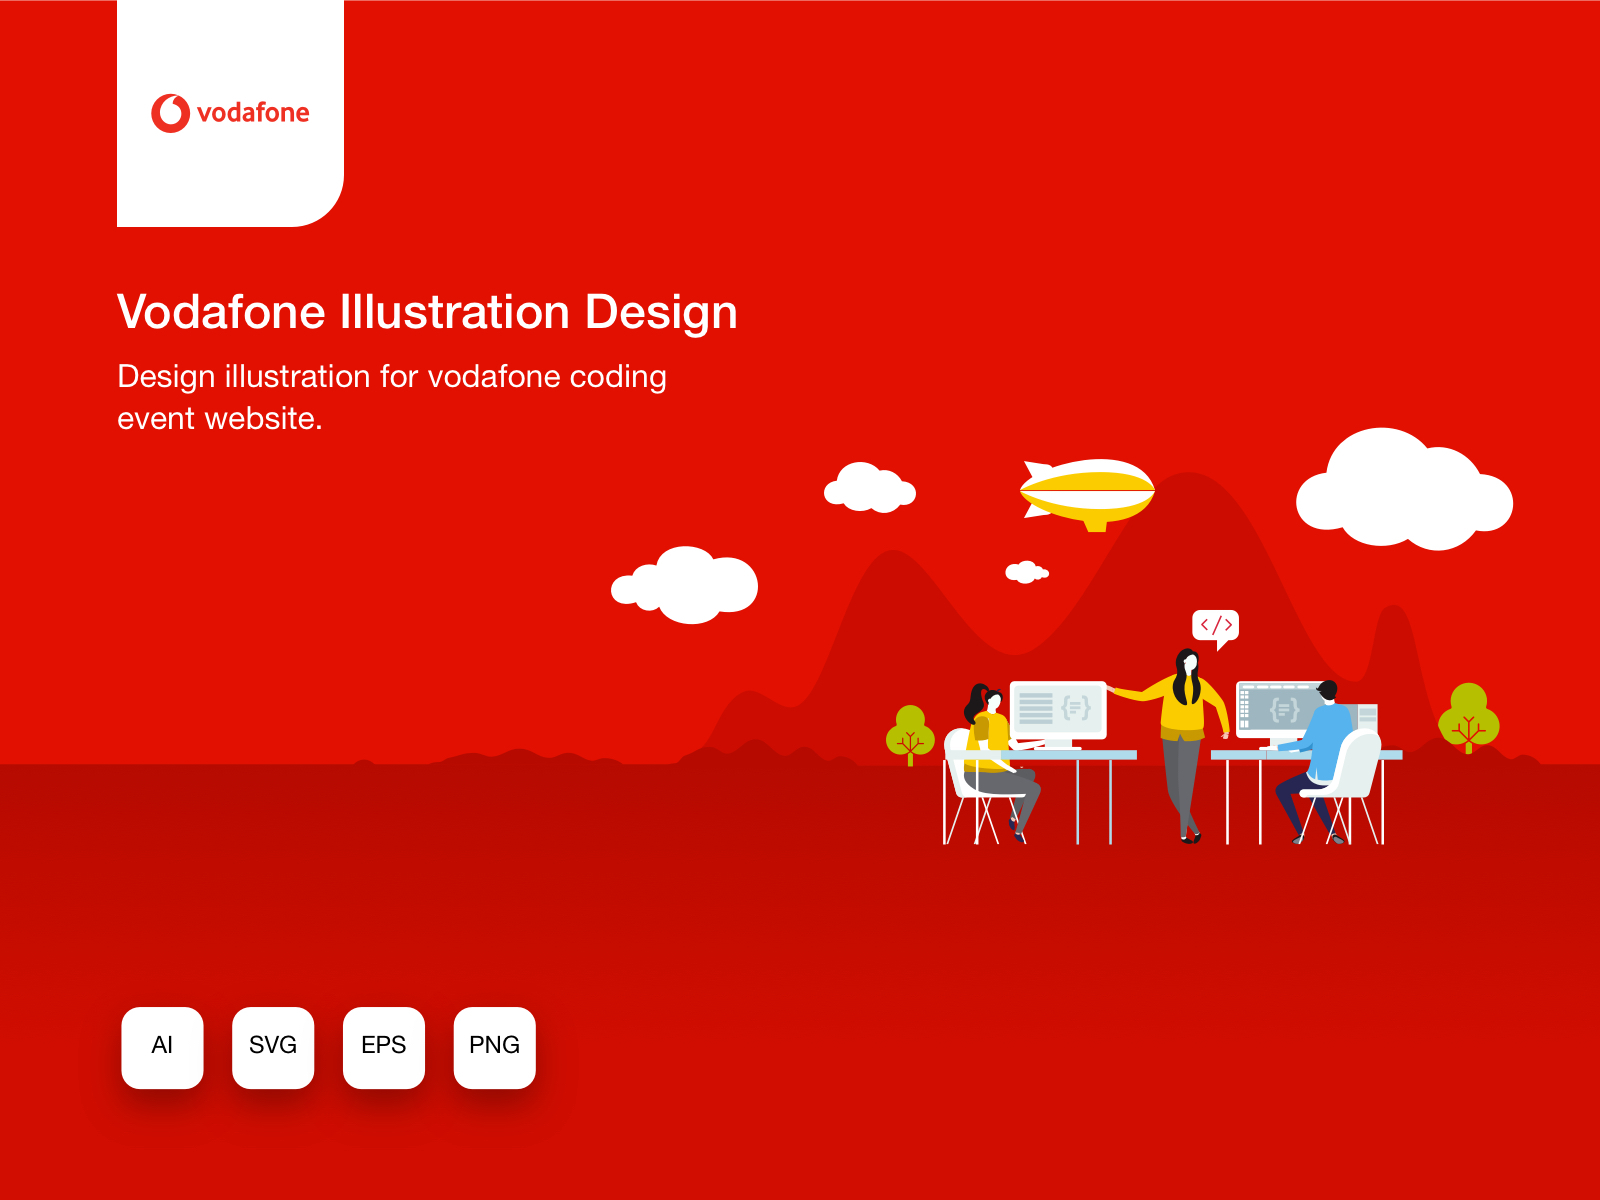 Vodafone Illustration Design by Abhishek Soni on Dribbble